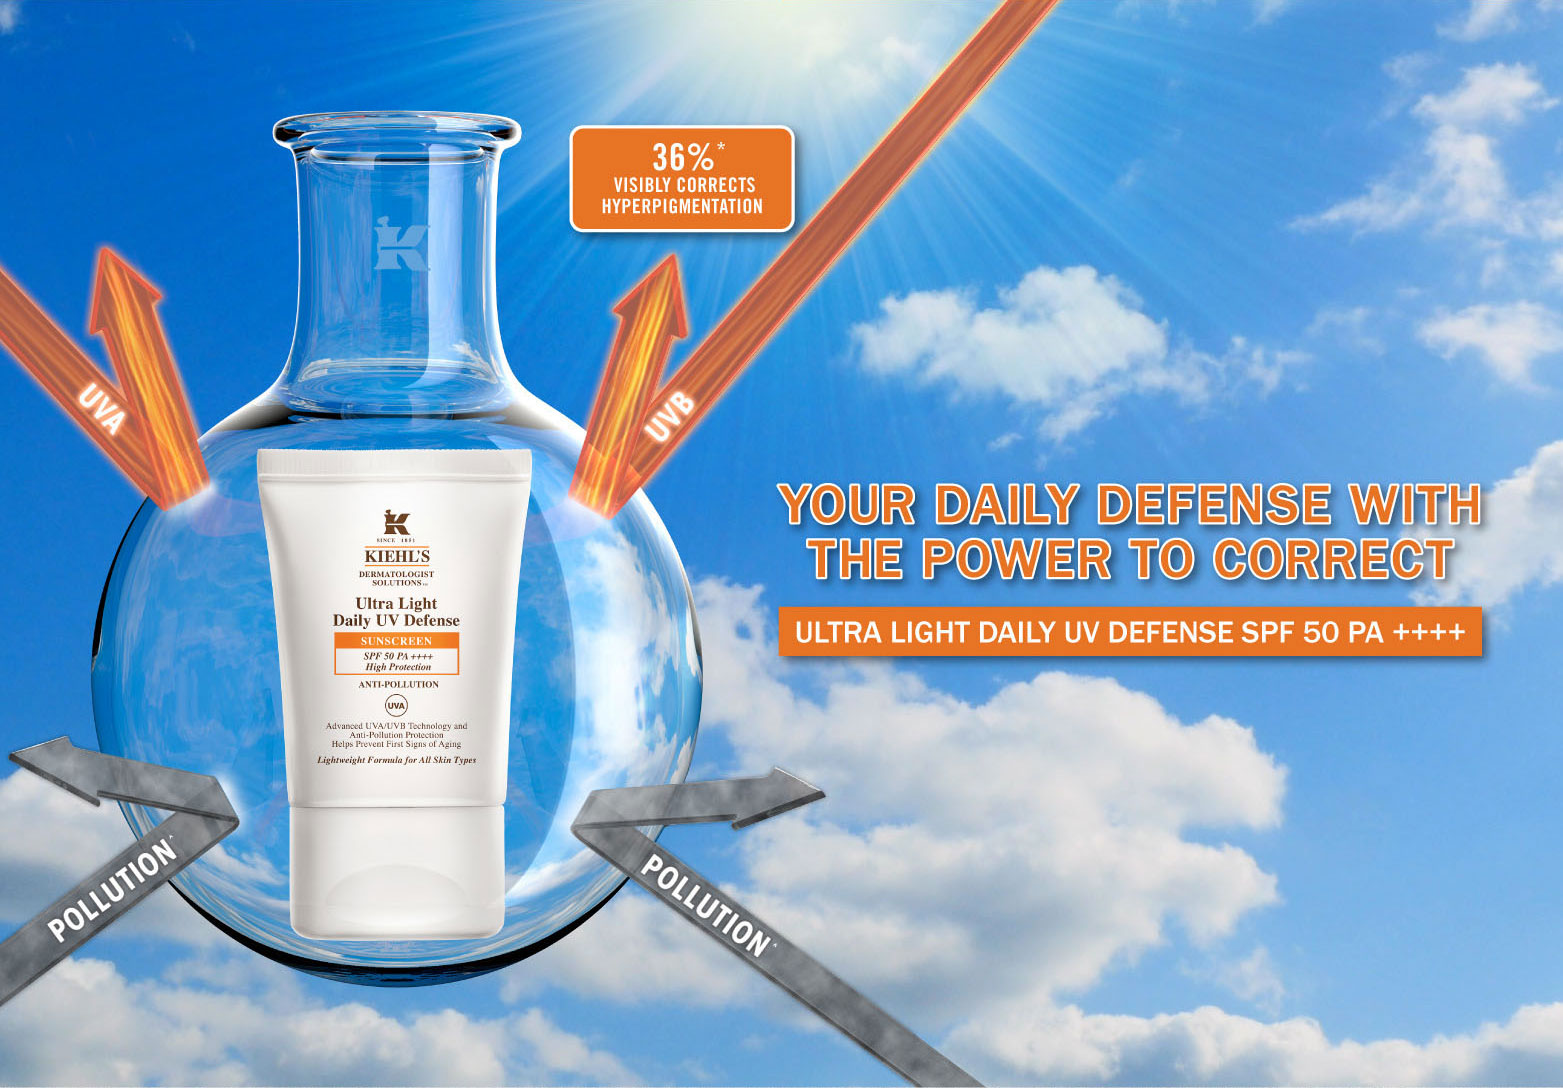 Dermatologist Solutions Ultra Light Daily UV Defense SPF50 PA++++ - Daily defense from UV